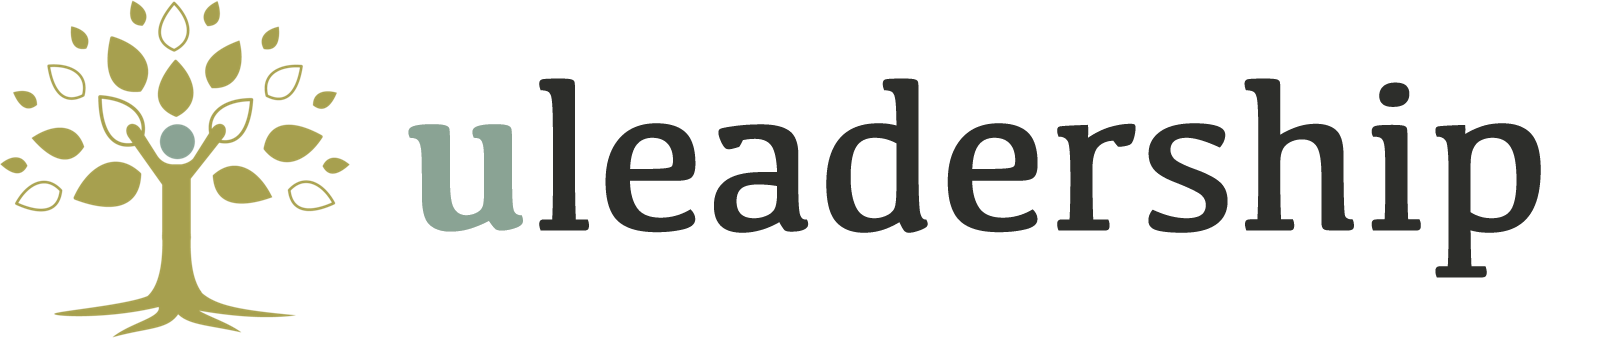 uLeadership Logo